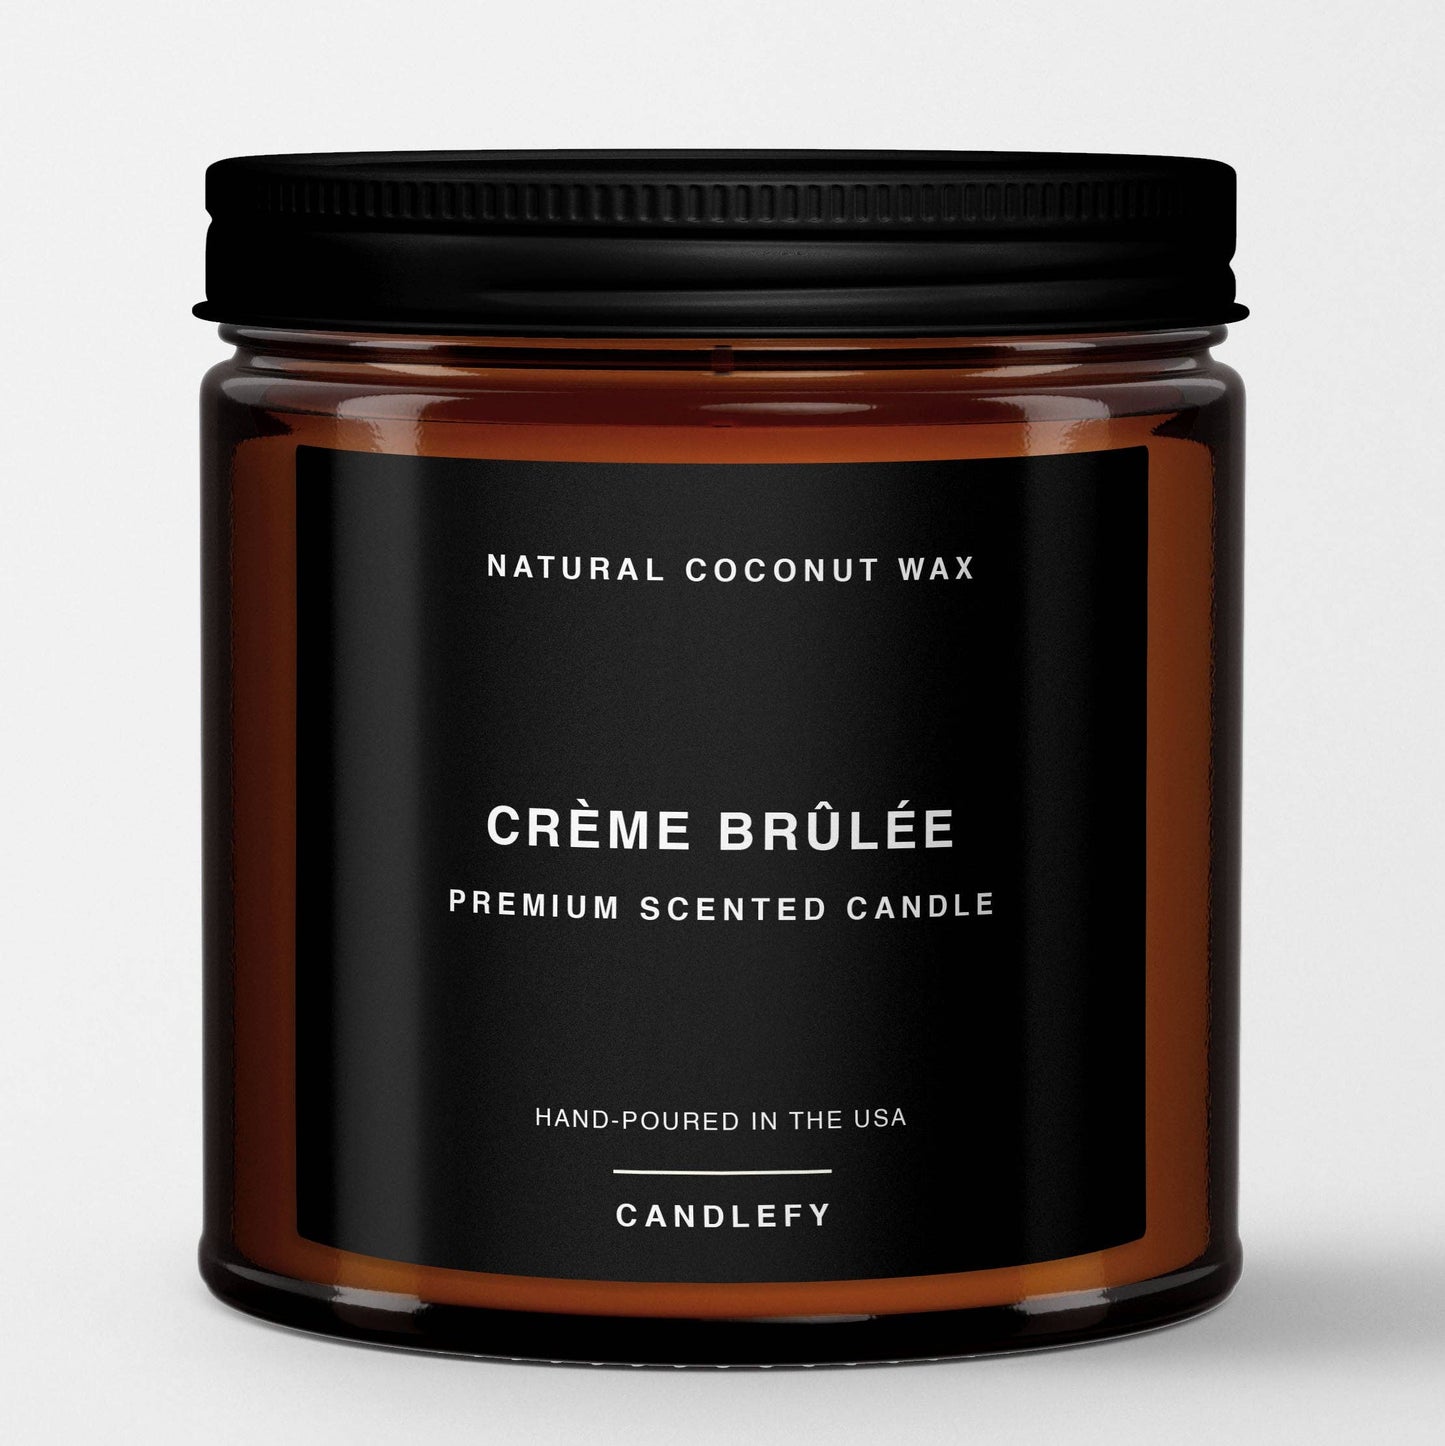 Creme Brulee Premium Scented Candle